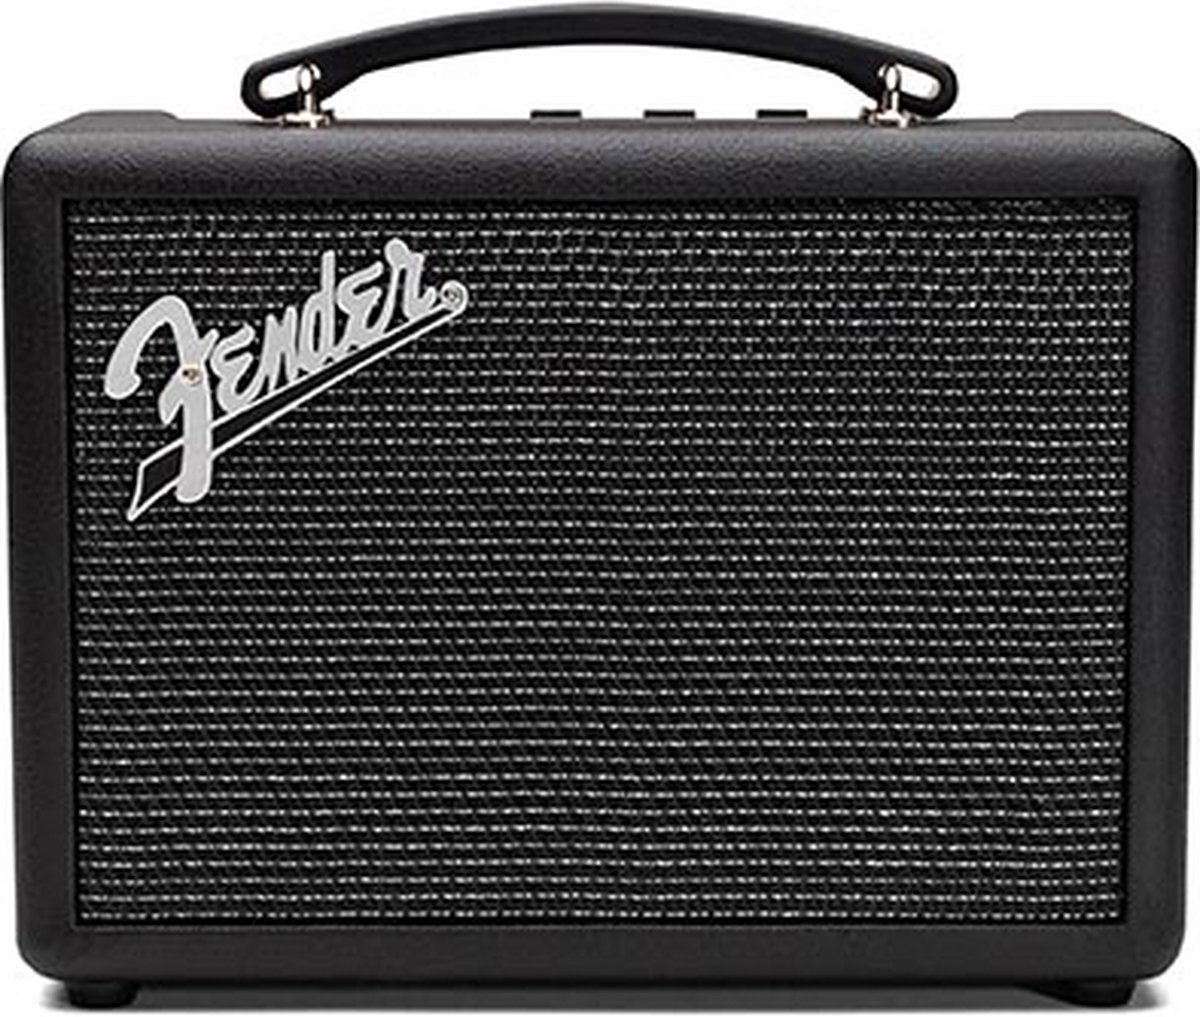 Fender Indio 2 Bluetooth draadloze speaker - Black